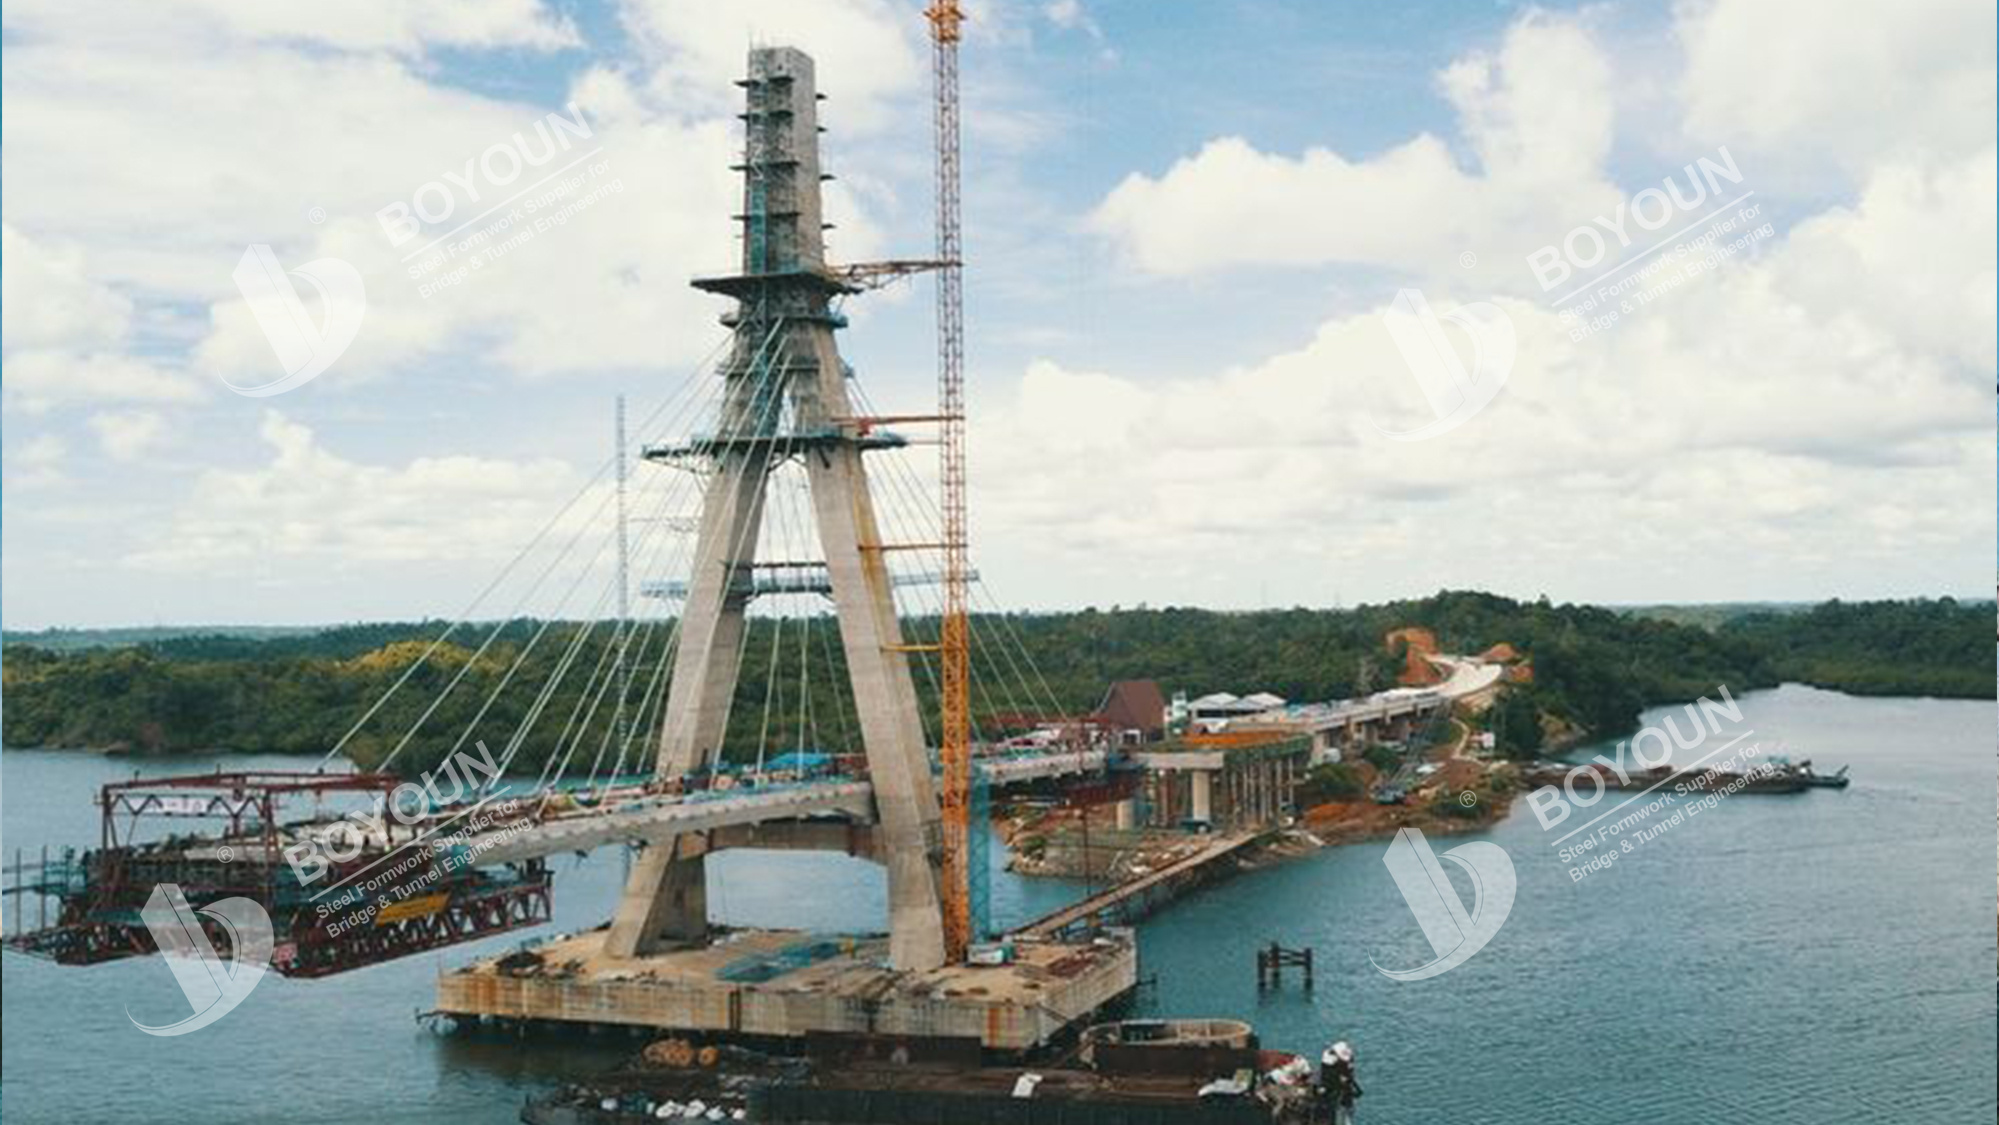 Indonesia Pulau Balang Bridge Project